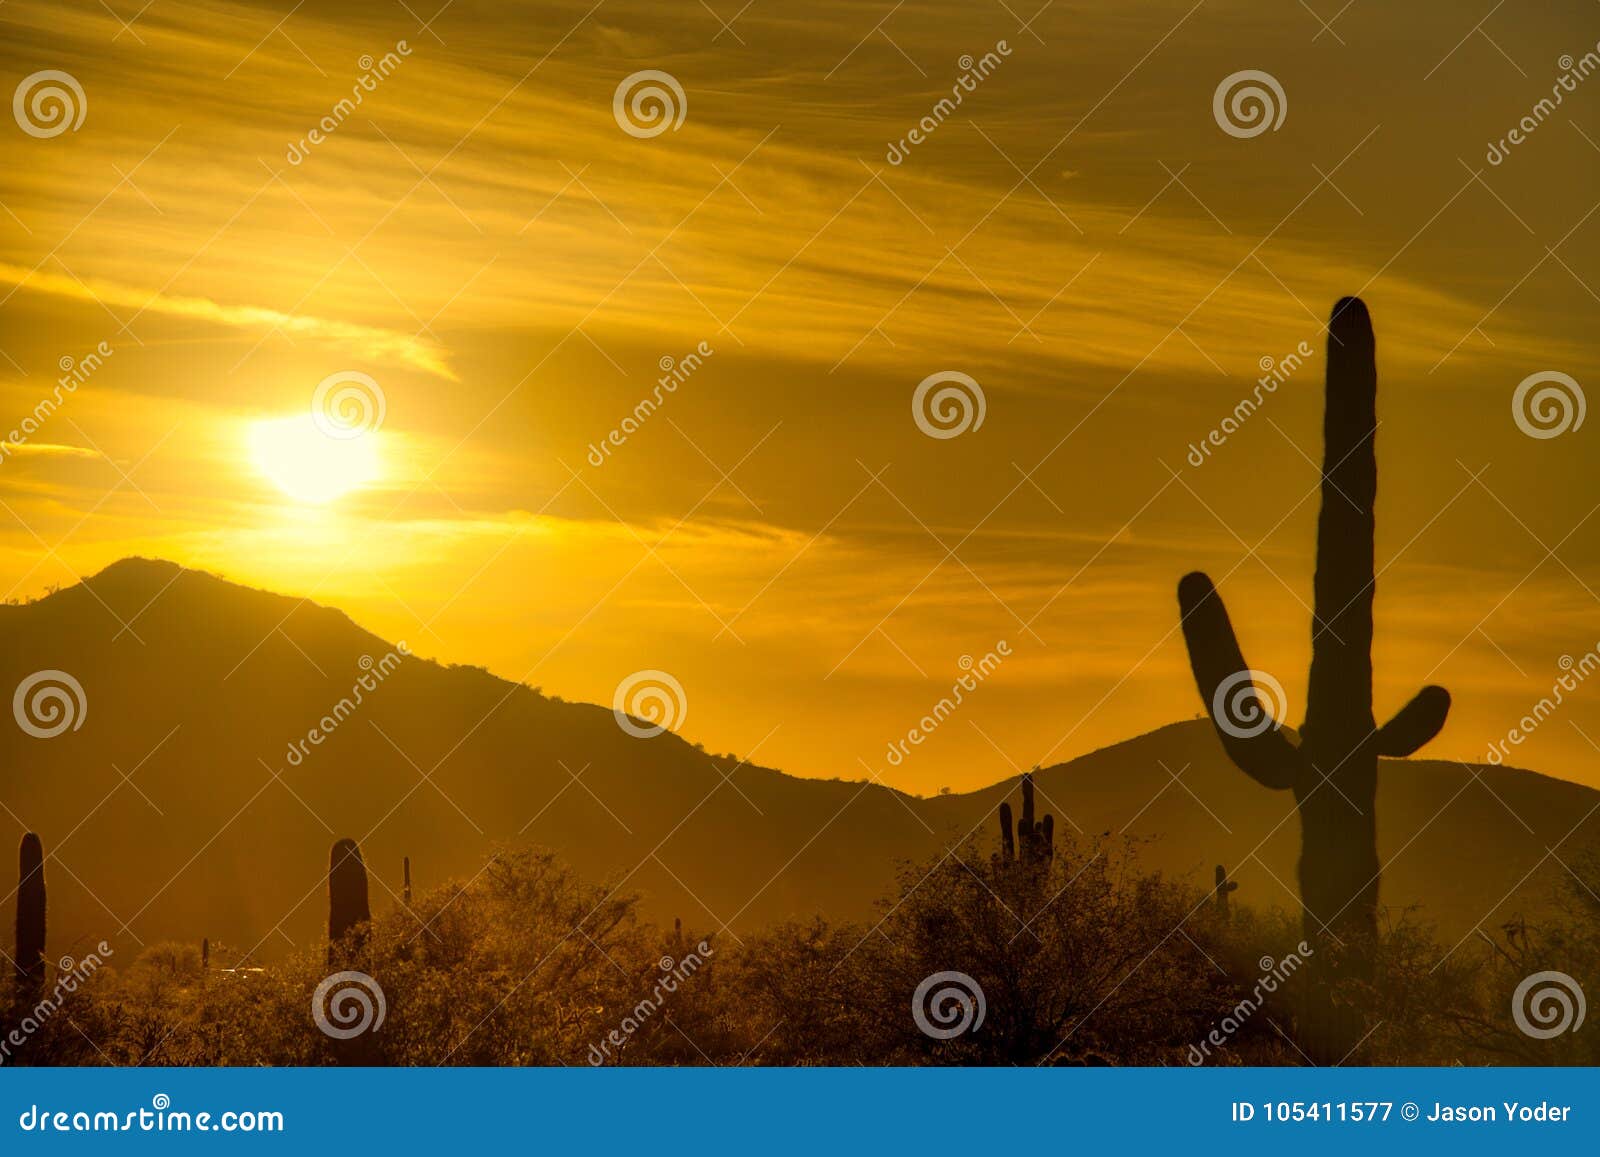 Cactus Sunset stock image. Image of outdoor, beautiful - 105411577